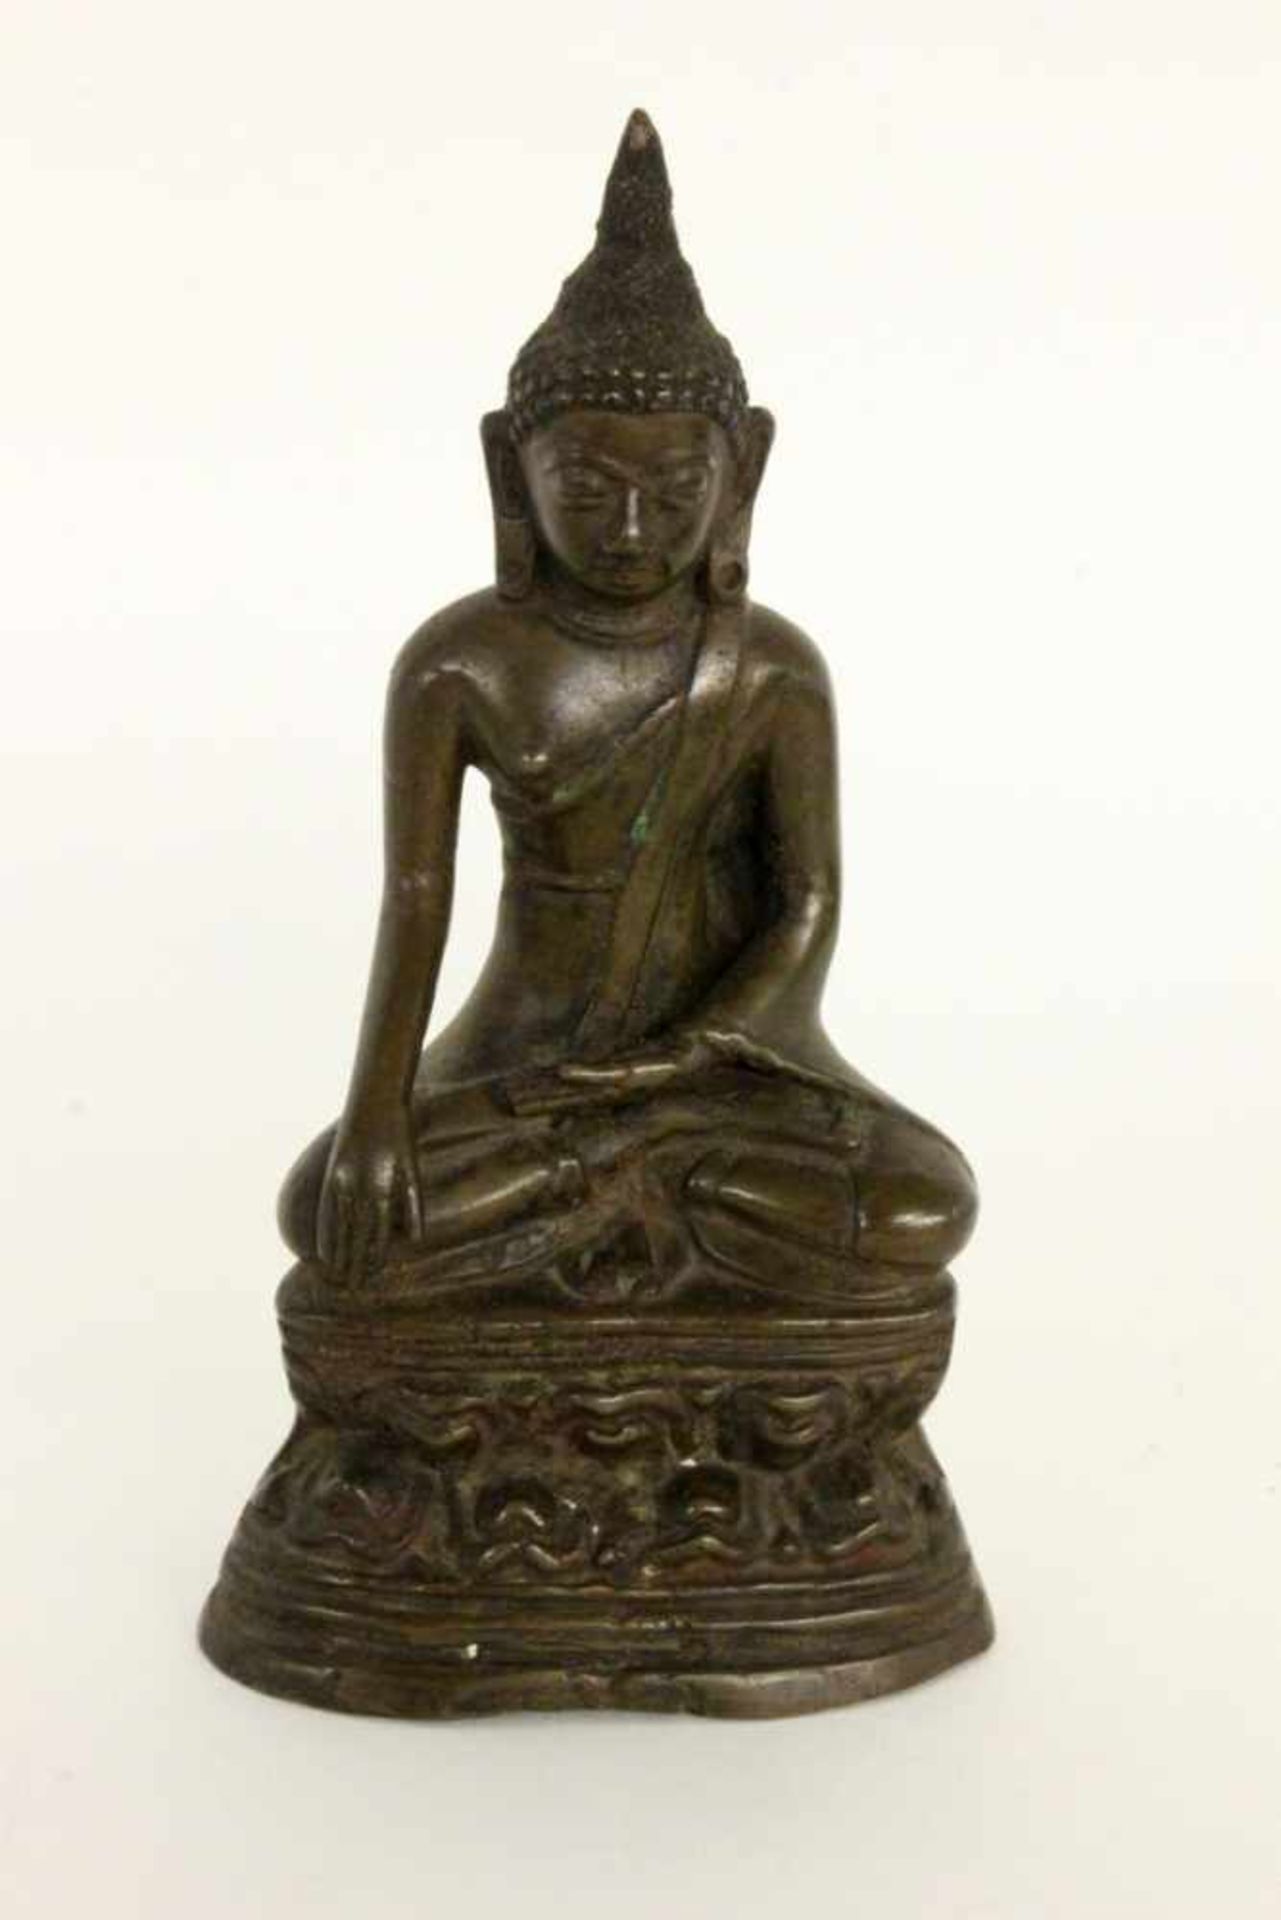 BUDDHA SHAKYAMUNIwohl Südostasien 19.Jh. auf Lotusthron sitzender Buddha mit Bhumisparsha Mudra-